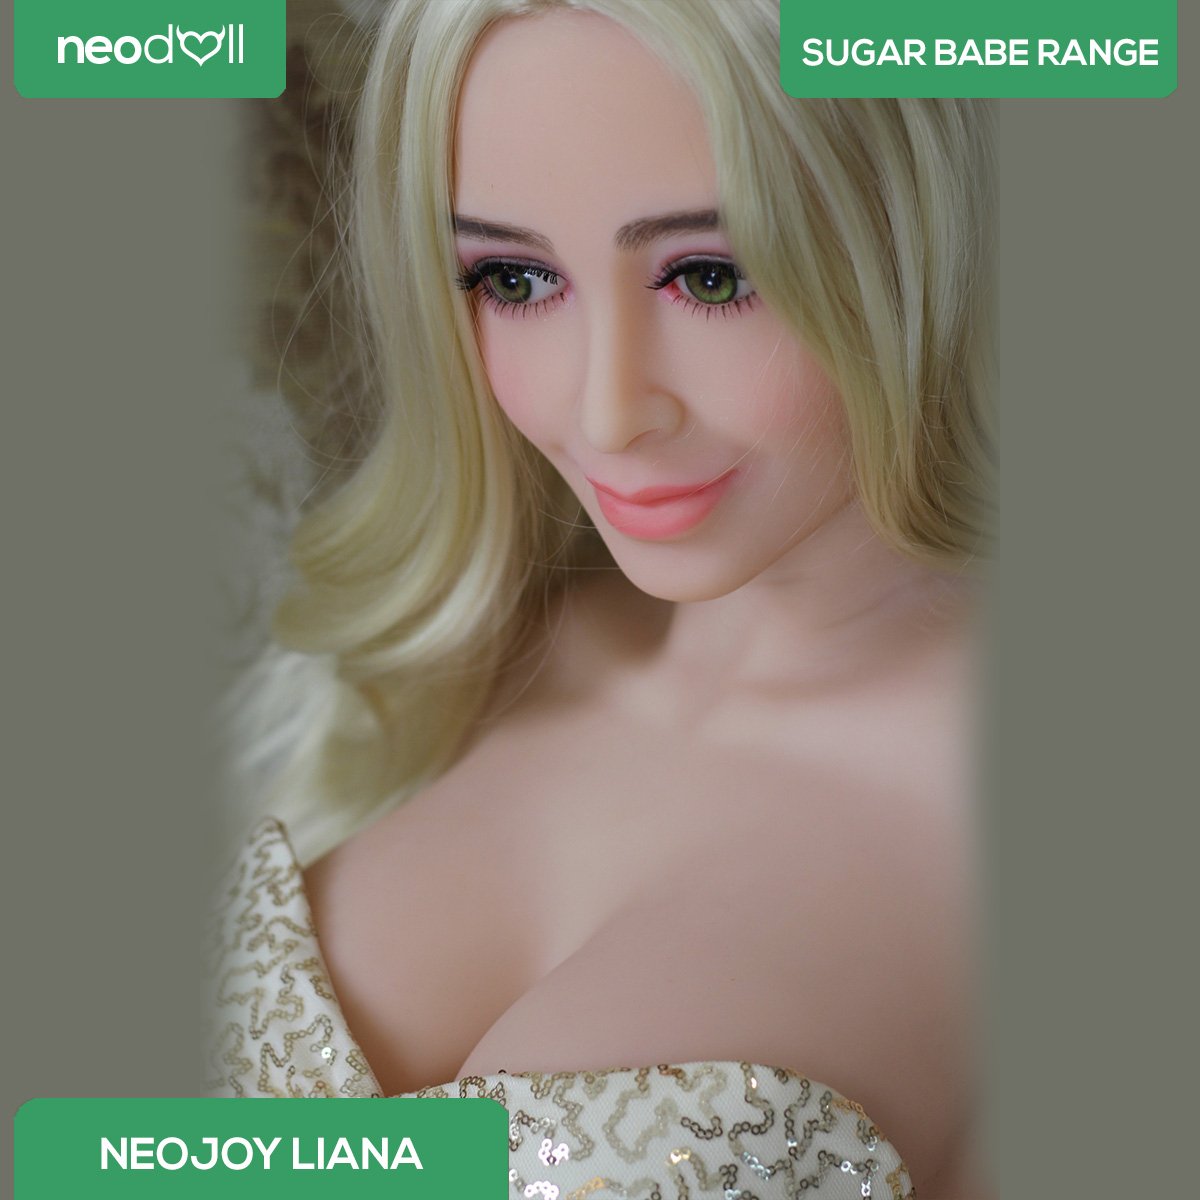 Sex Doll Liana | 165cm Height | Natural Skin | Shrug & Standing & Uterus & Gel Breast | Neodoll Sugar Babe